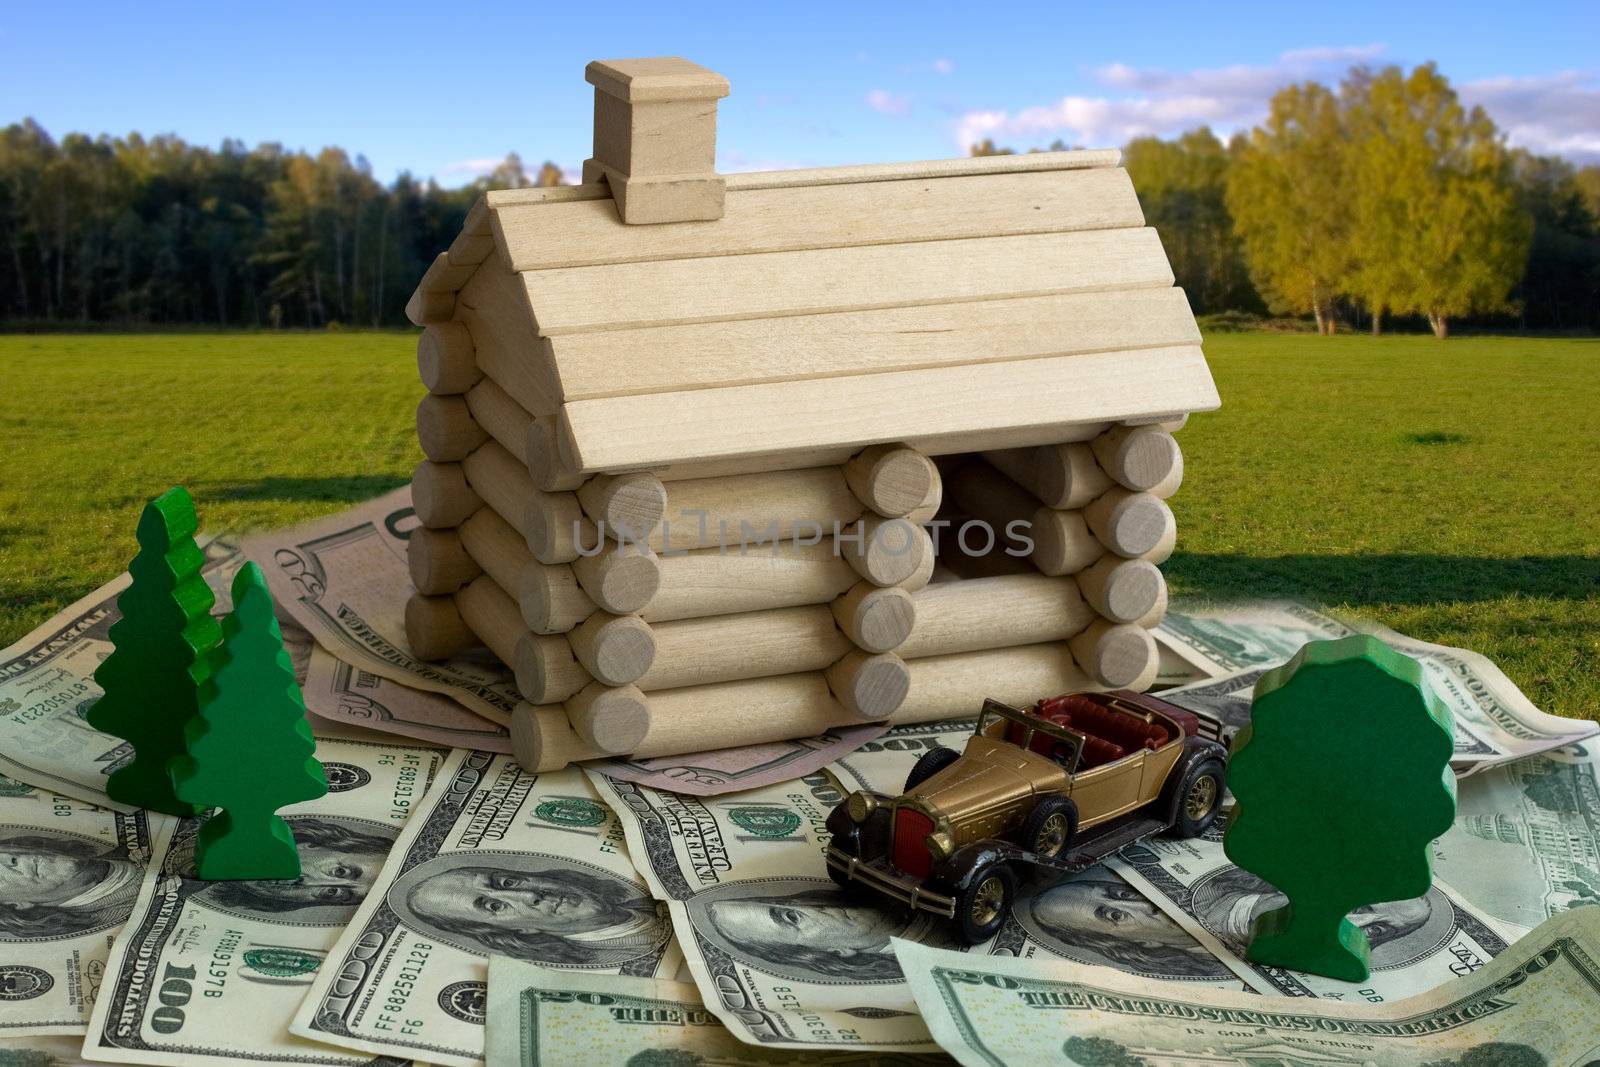 Miniature Log House building model and money dollar bills background